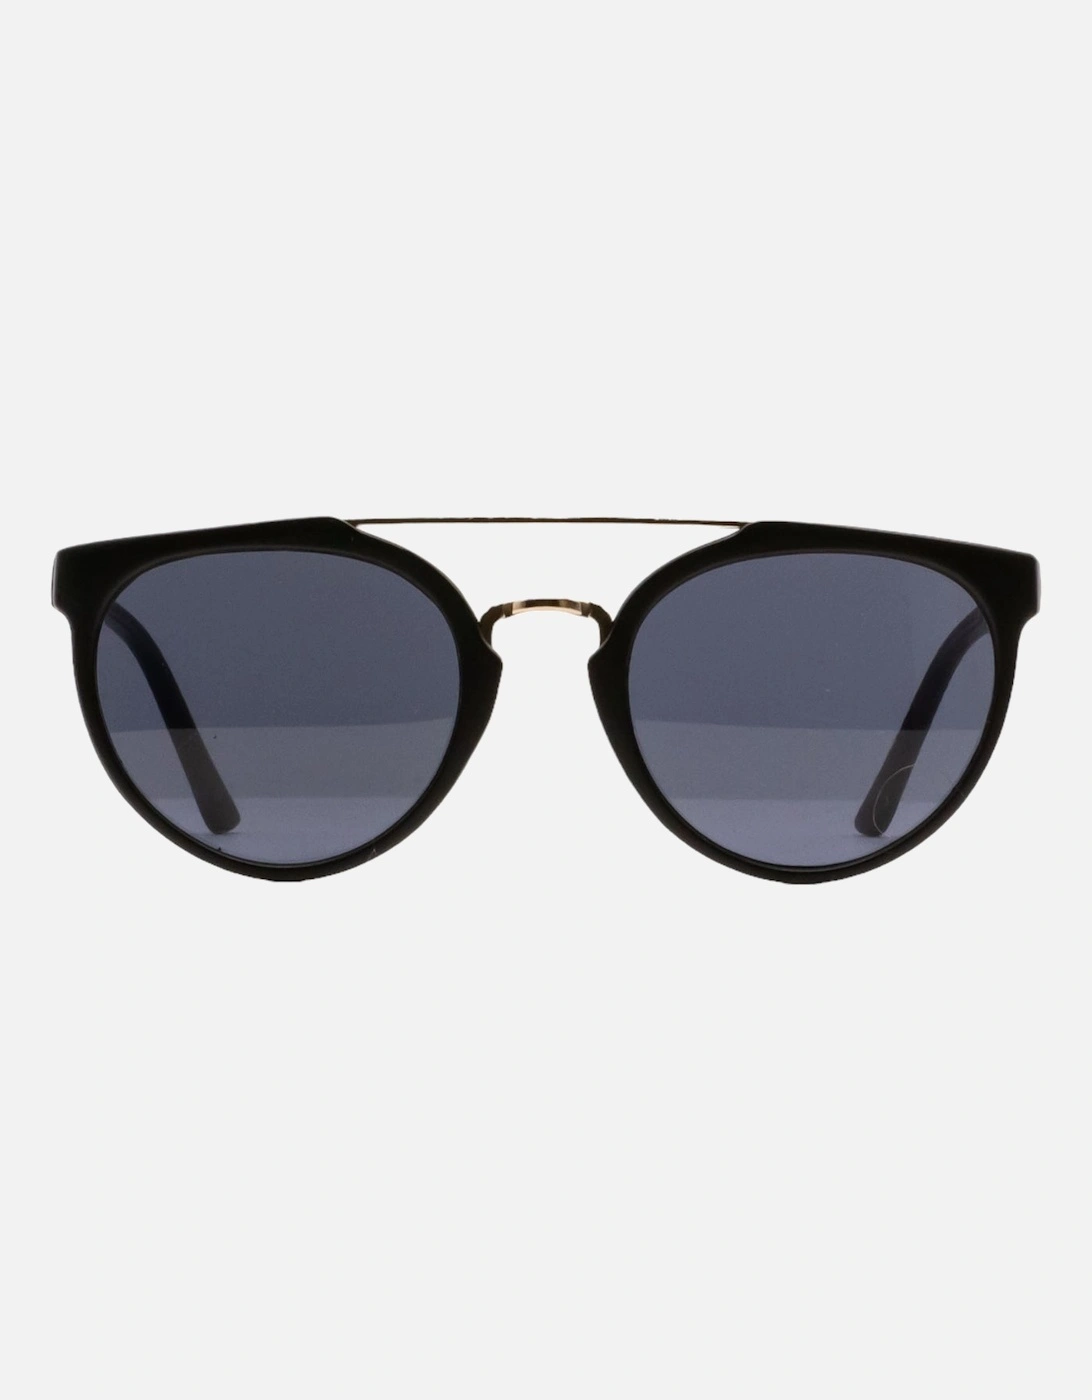 Copenhagen Sunglasses - Black/Gold